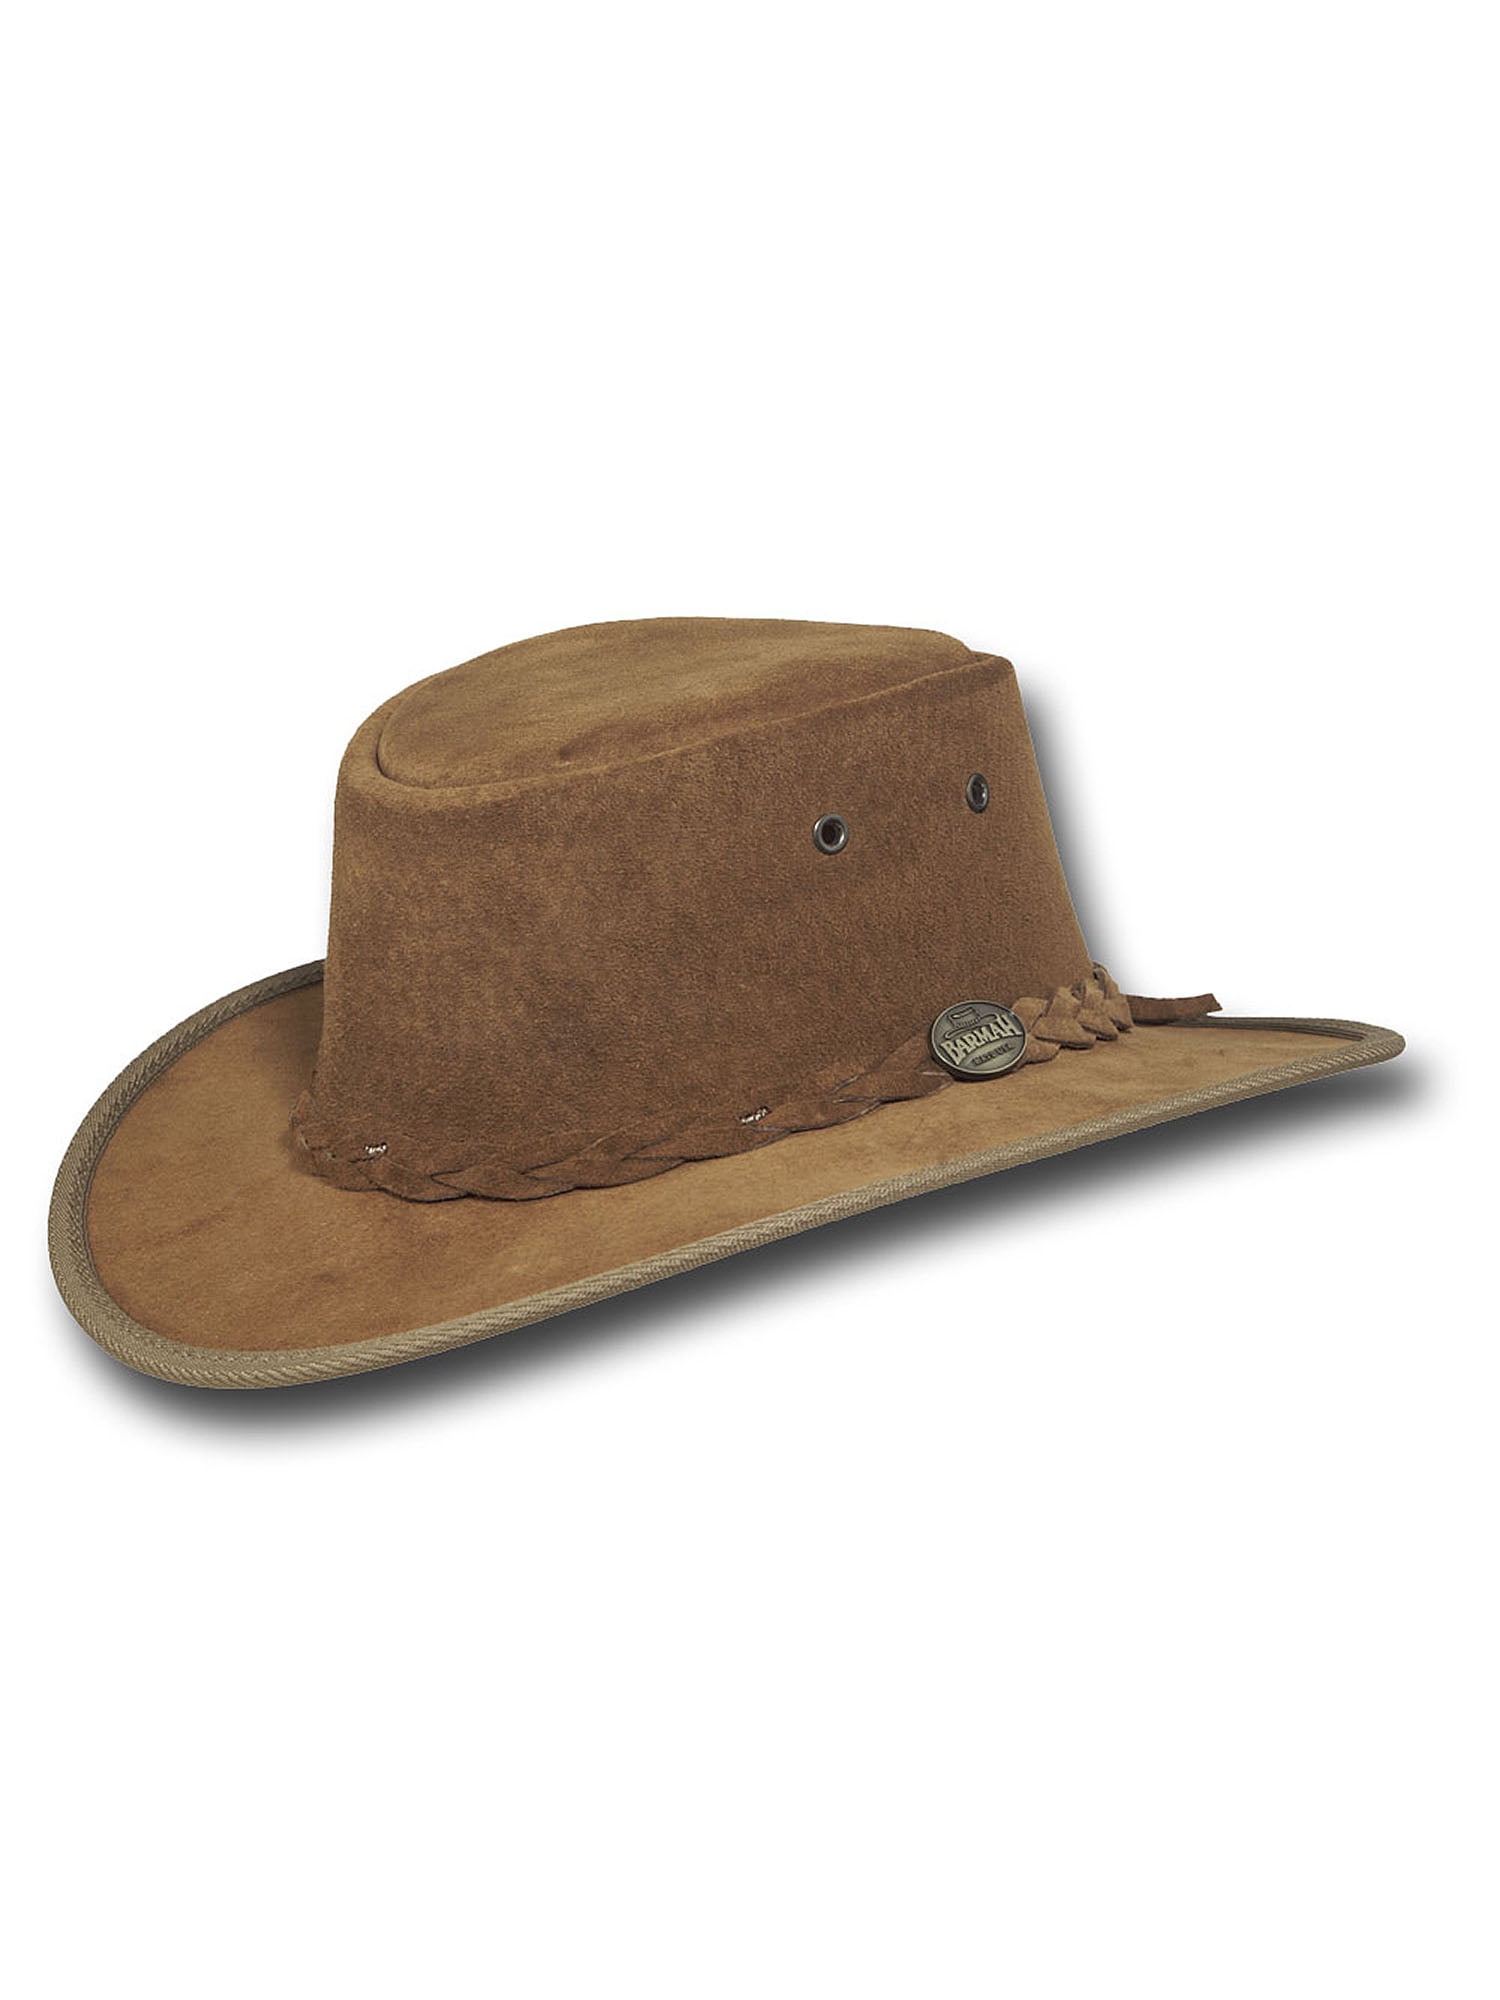 Barmah Hats Foldaway Suede Leather Hat - Item 1066 - Walmart.com